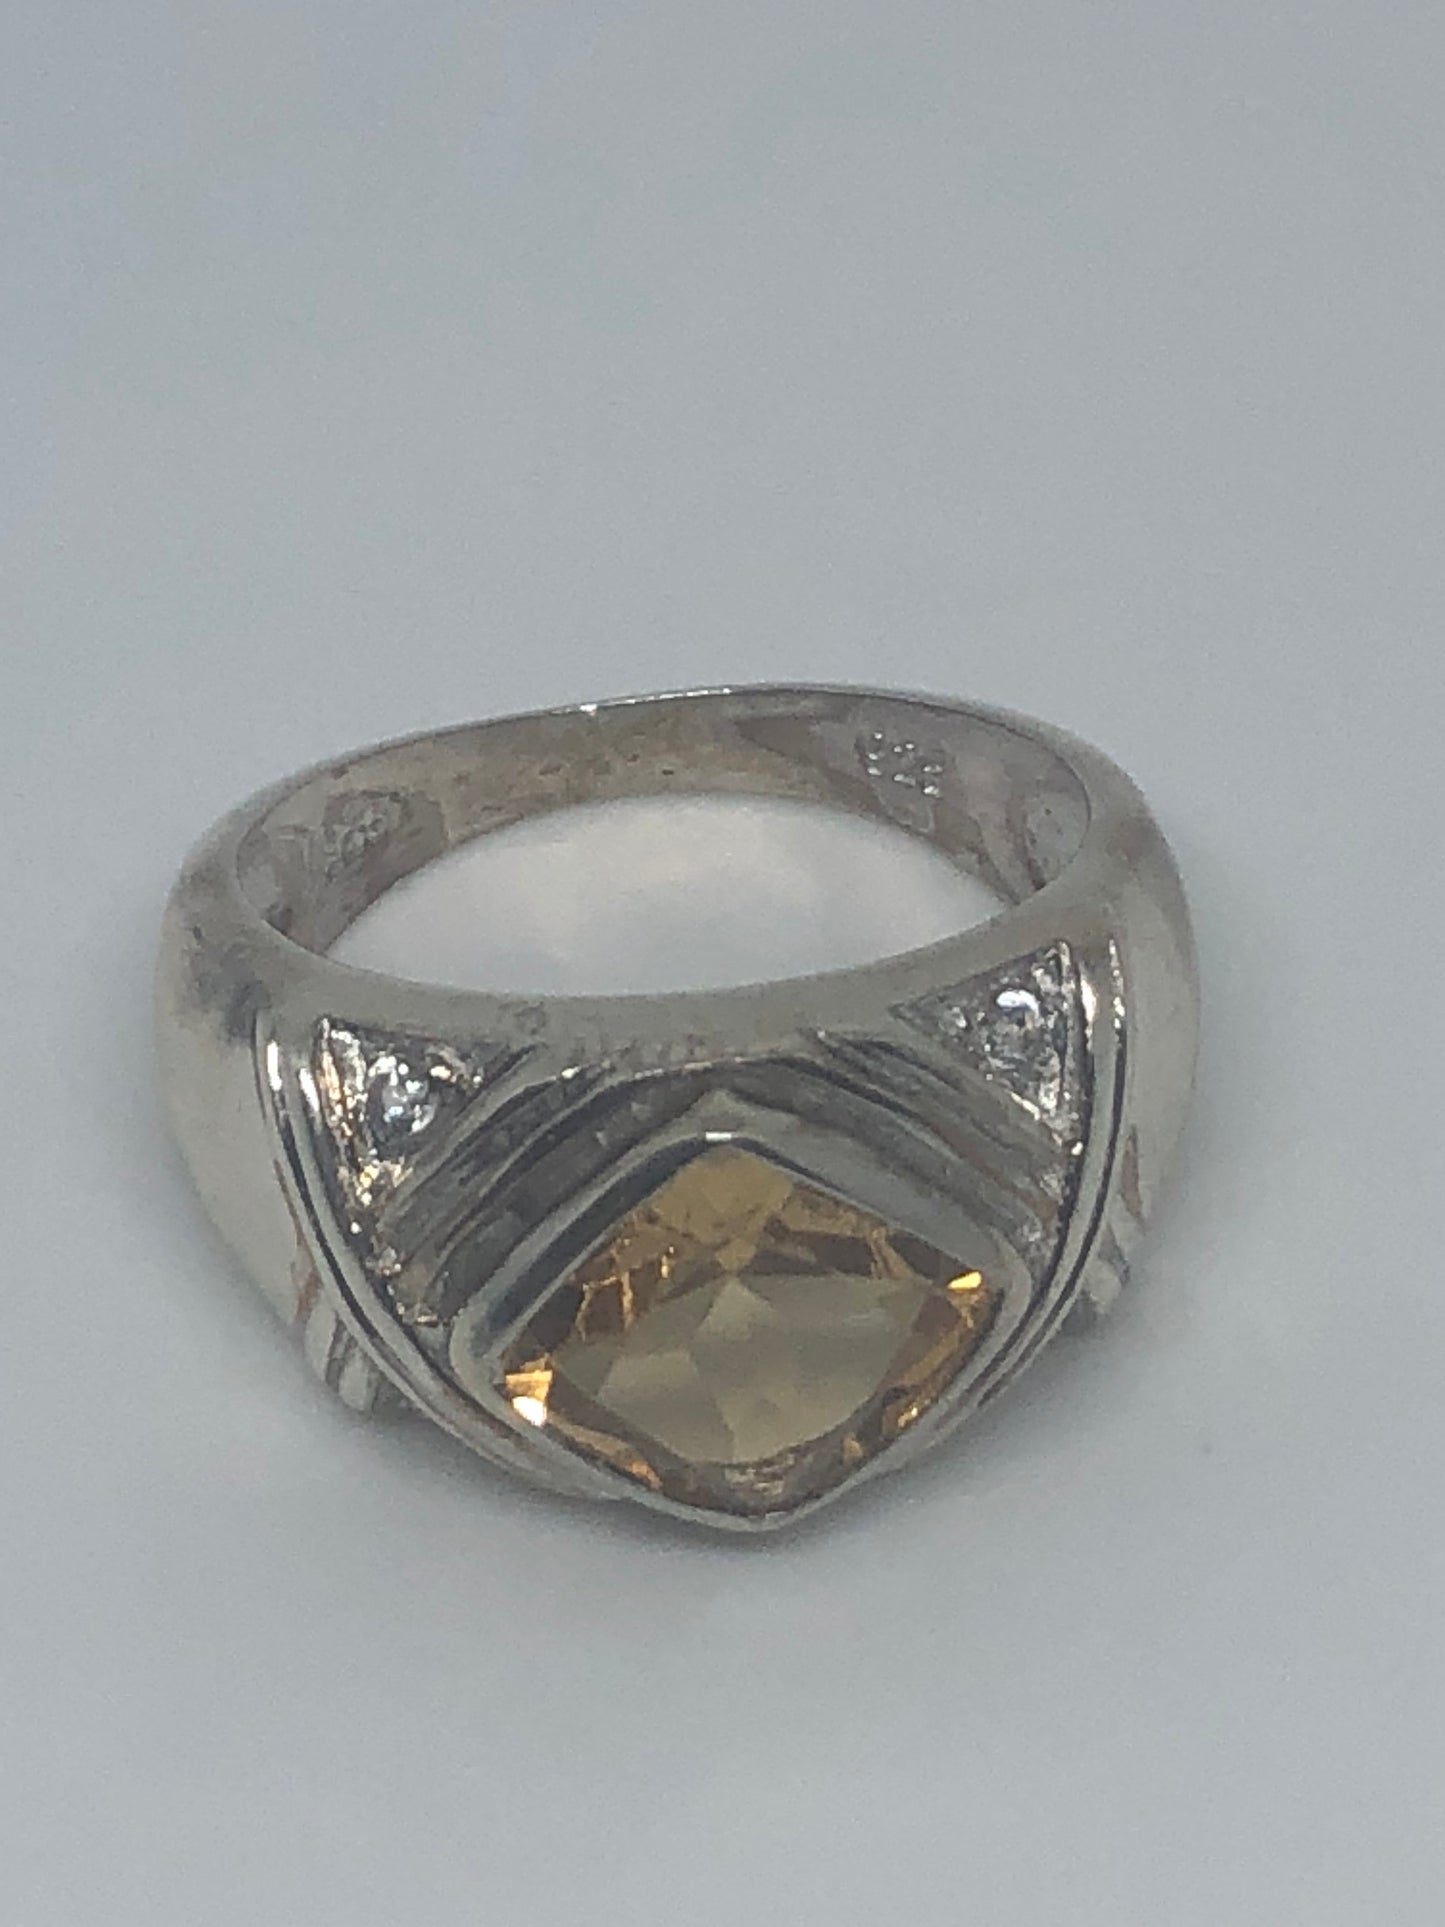 Vintage Handmade Golden Genuine Citrine 925 Sterling Silver Gothic Ring